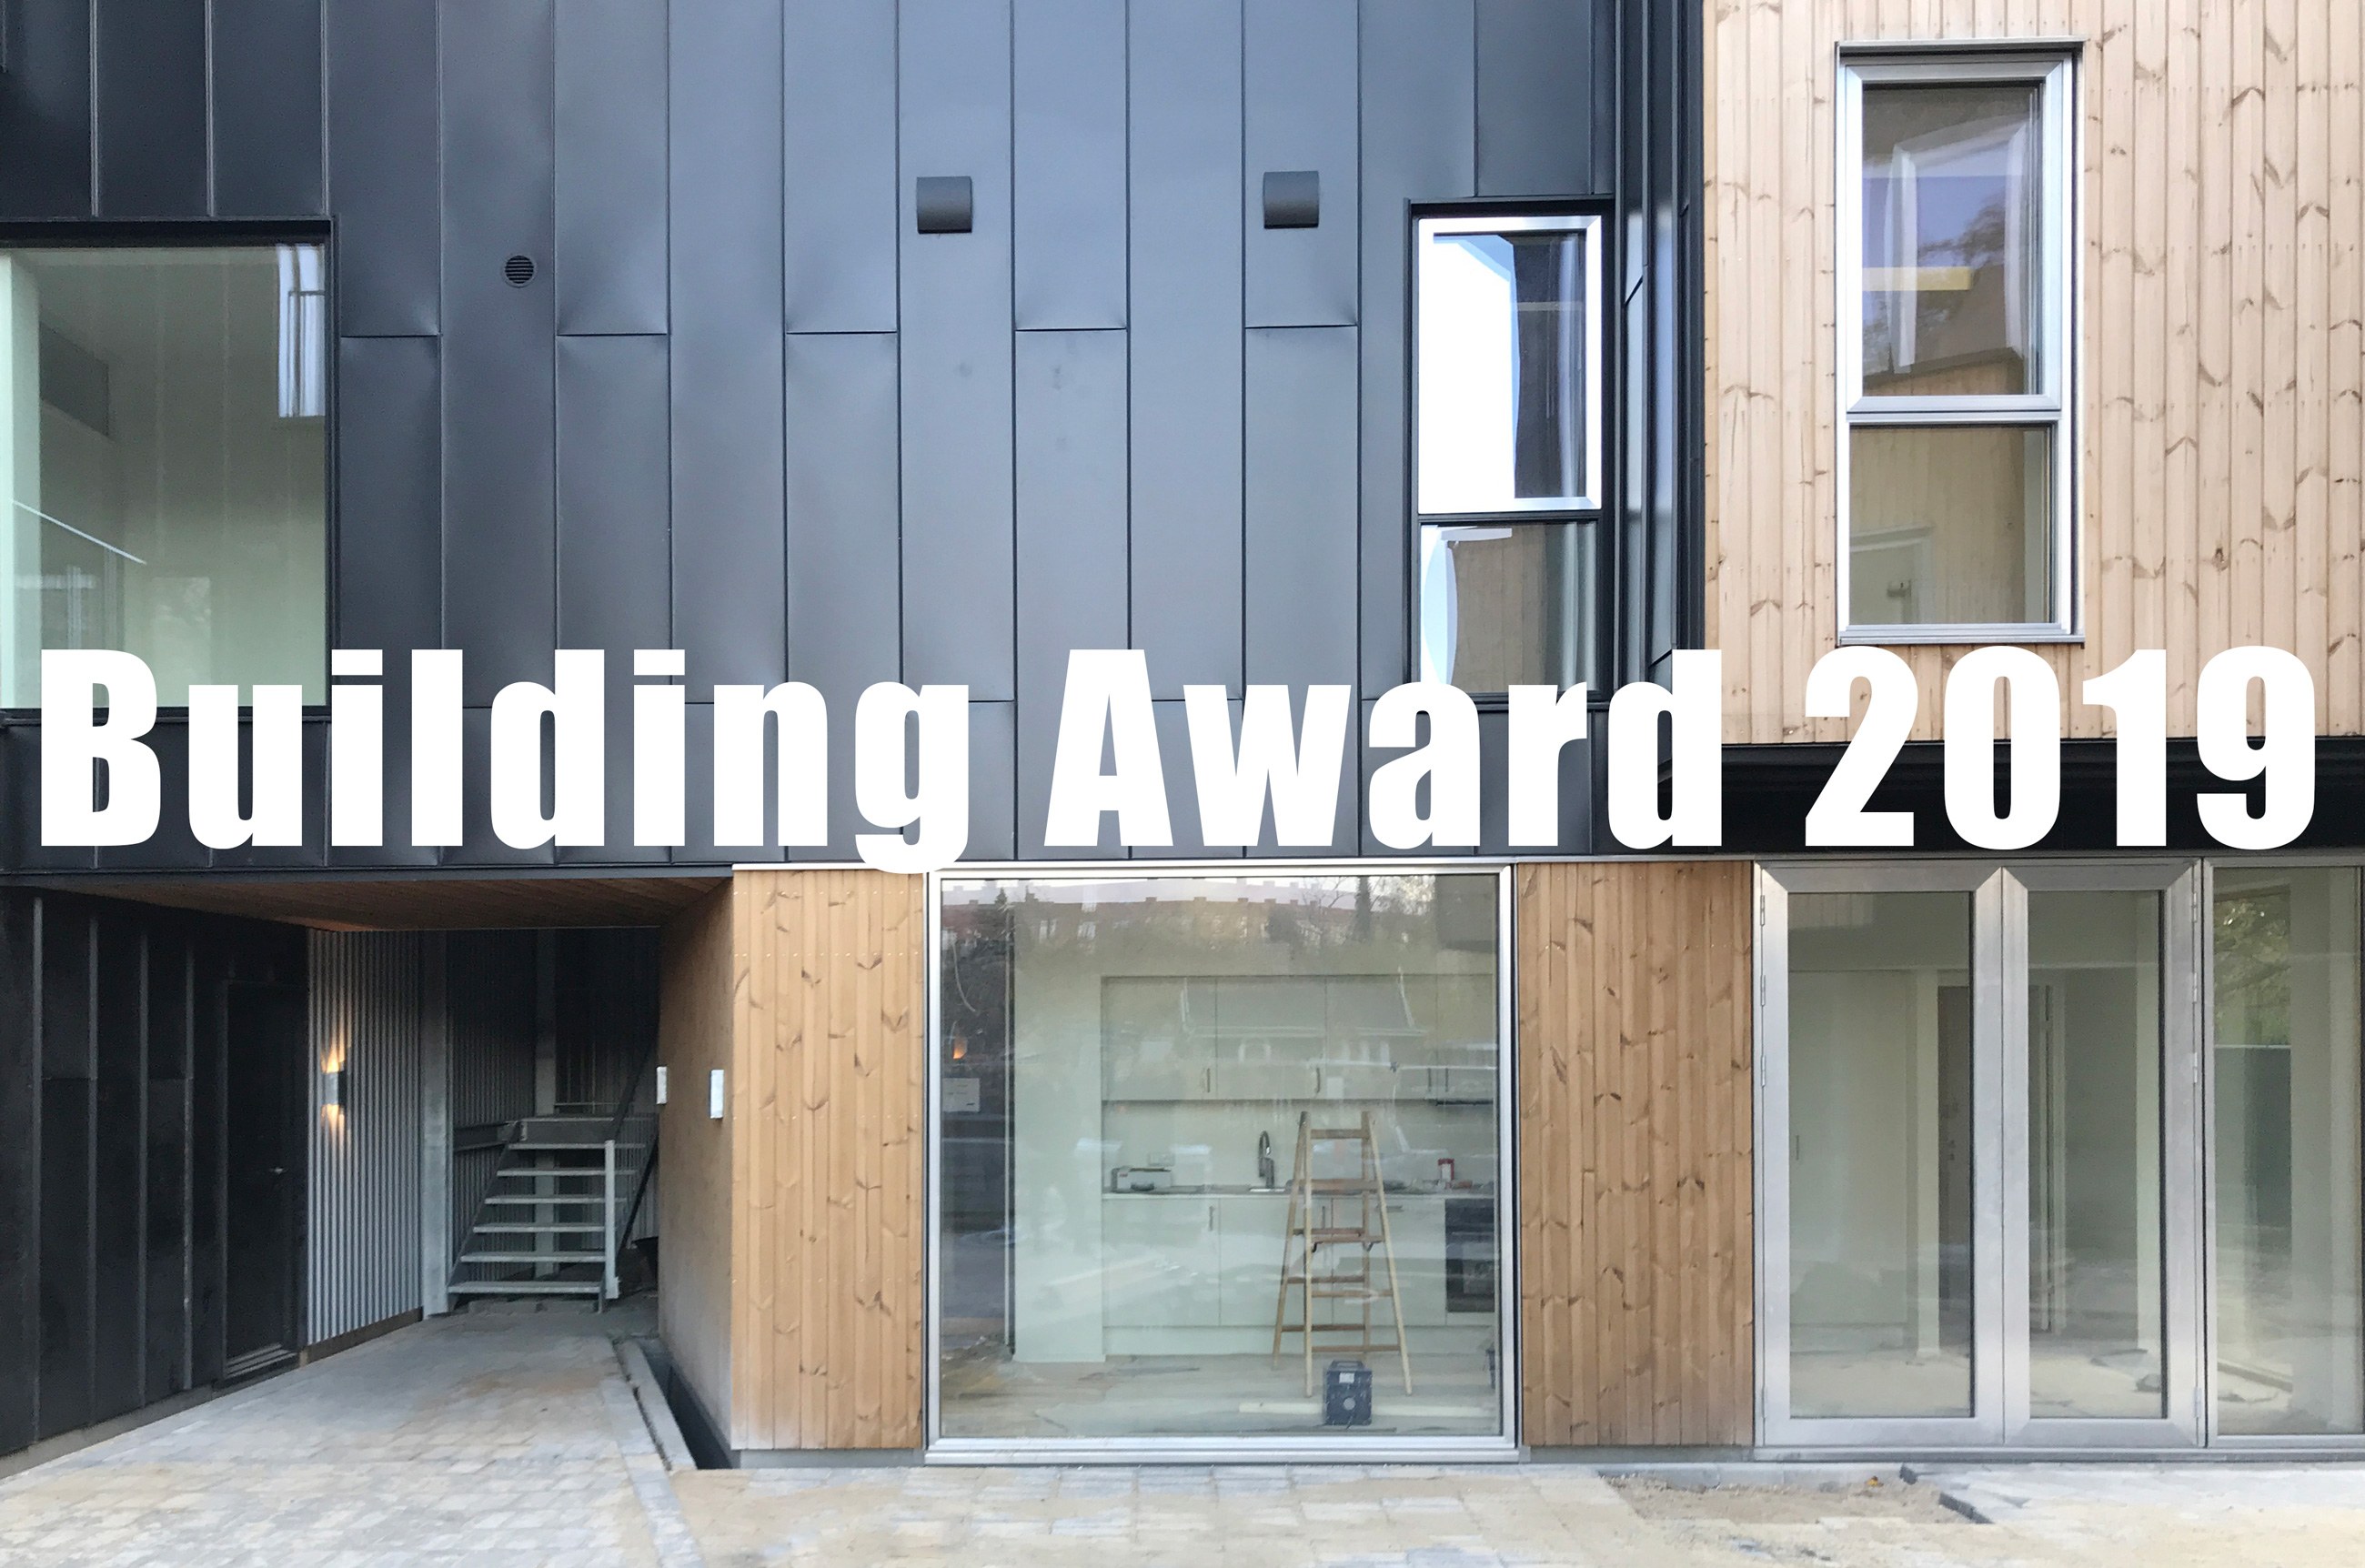 BA19-building-awards-2019-Venligbolig-Plus-ONV-arkitekter-præfab-boliger-prefab-housing-1